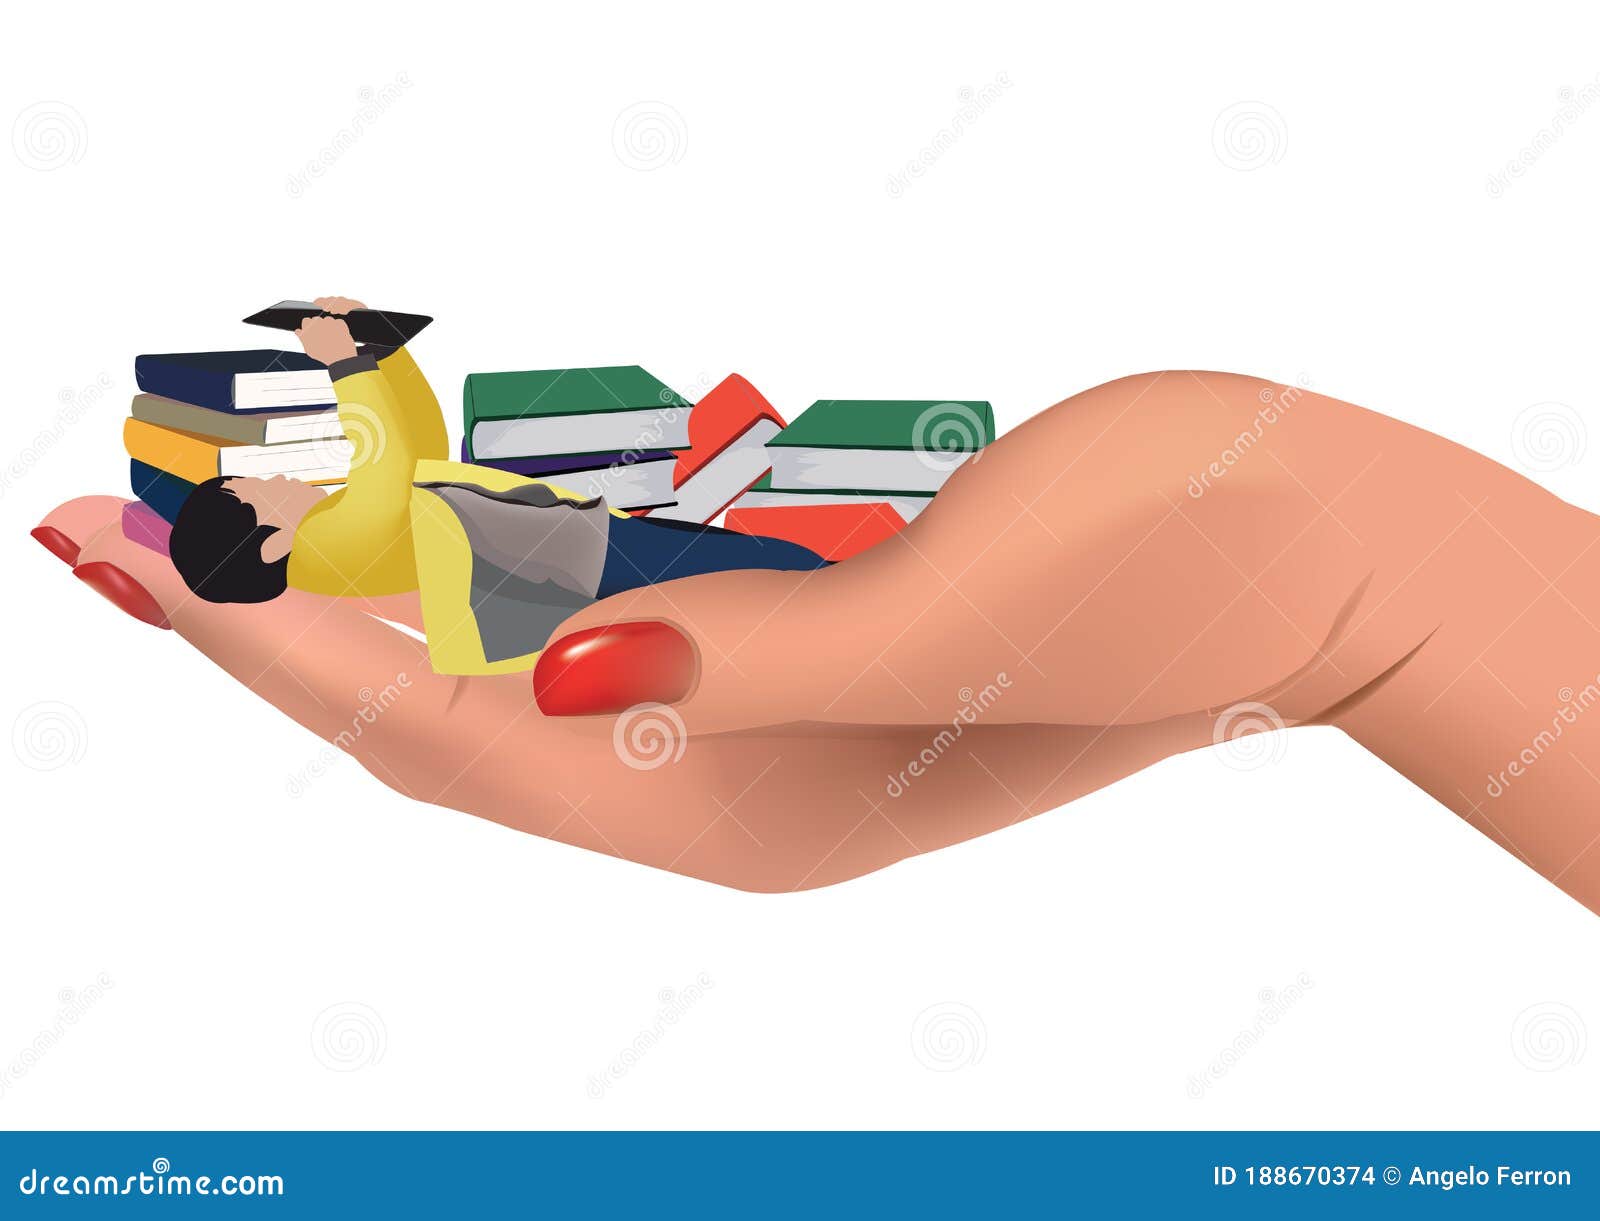 female hand that supports books and basmbina